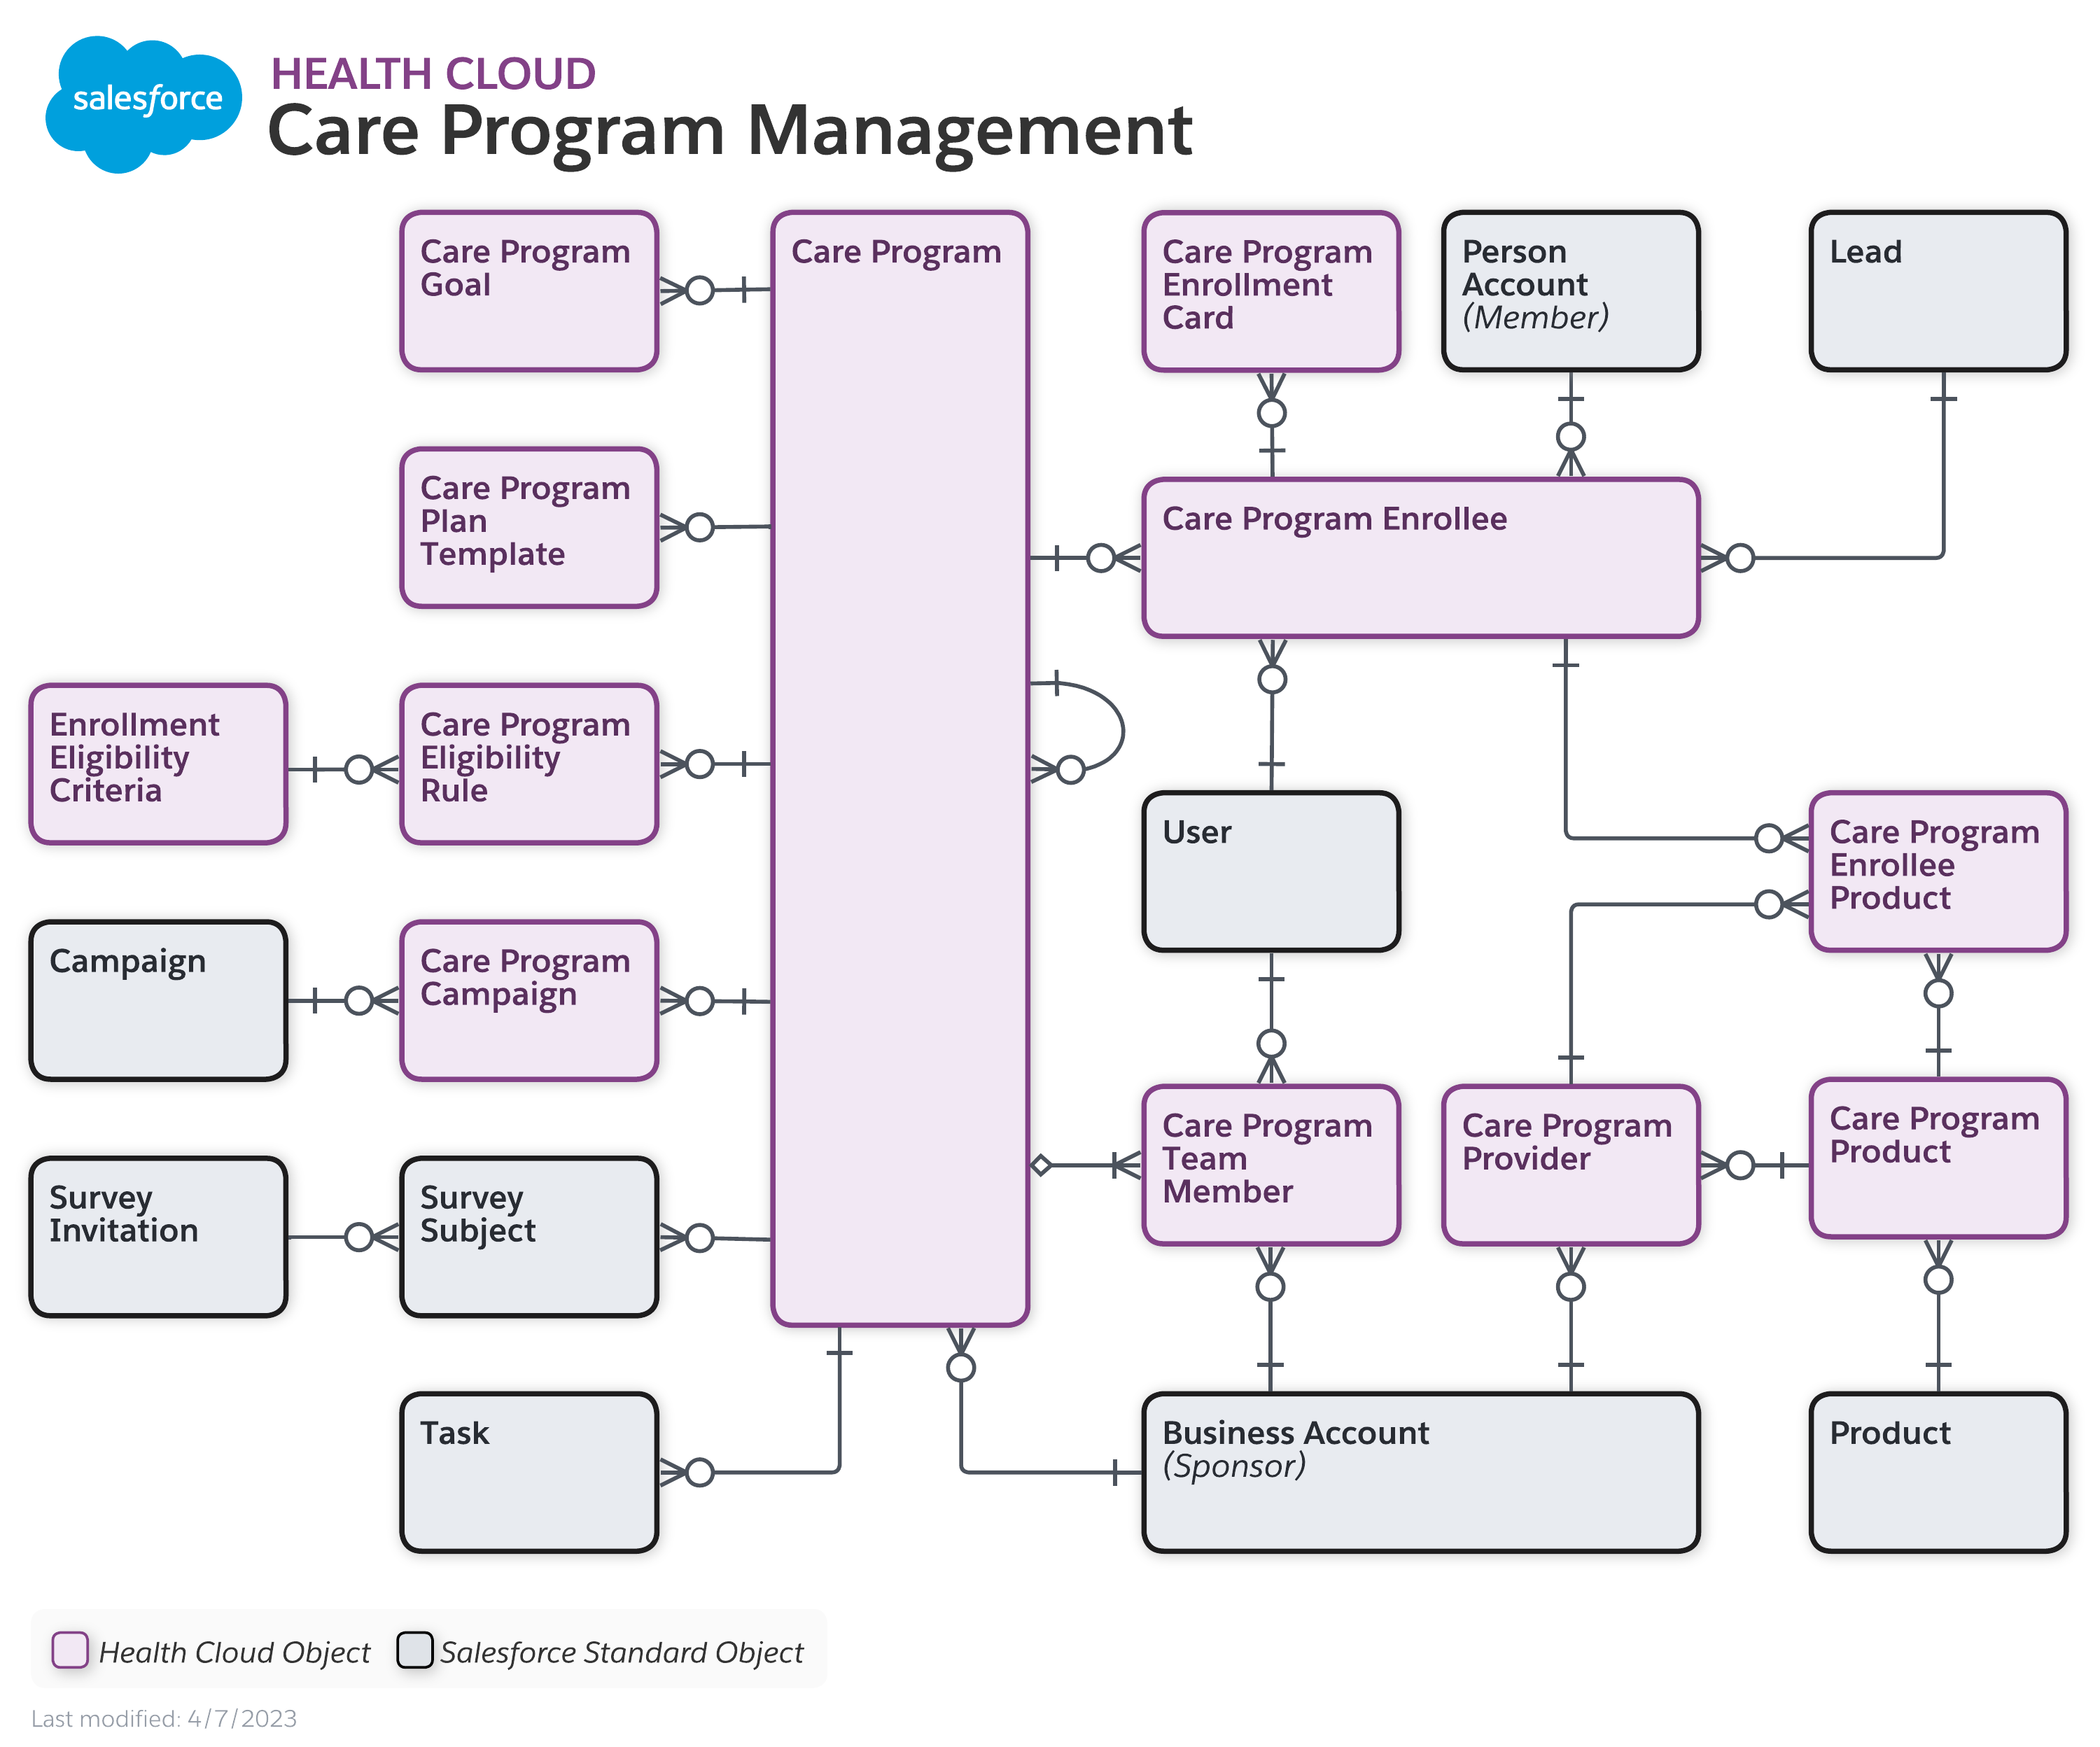 Health Cloud Care Program Management Data Model